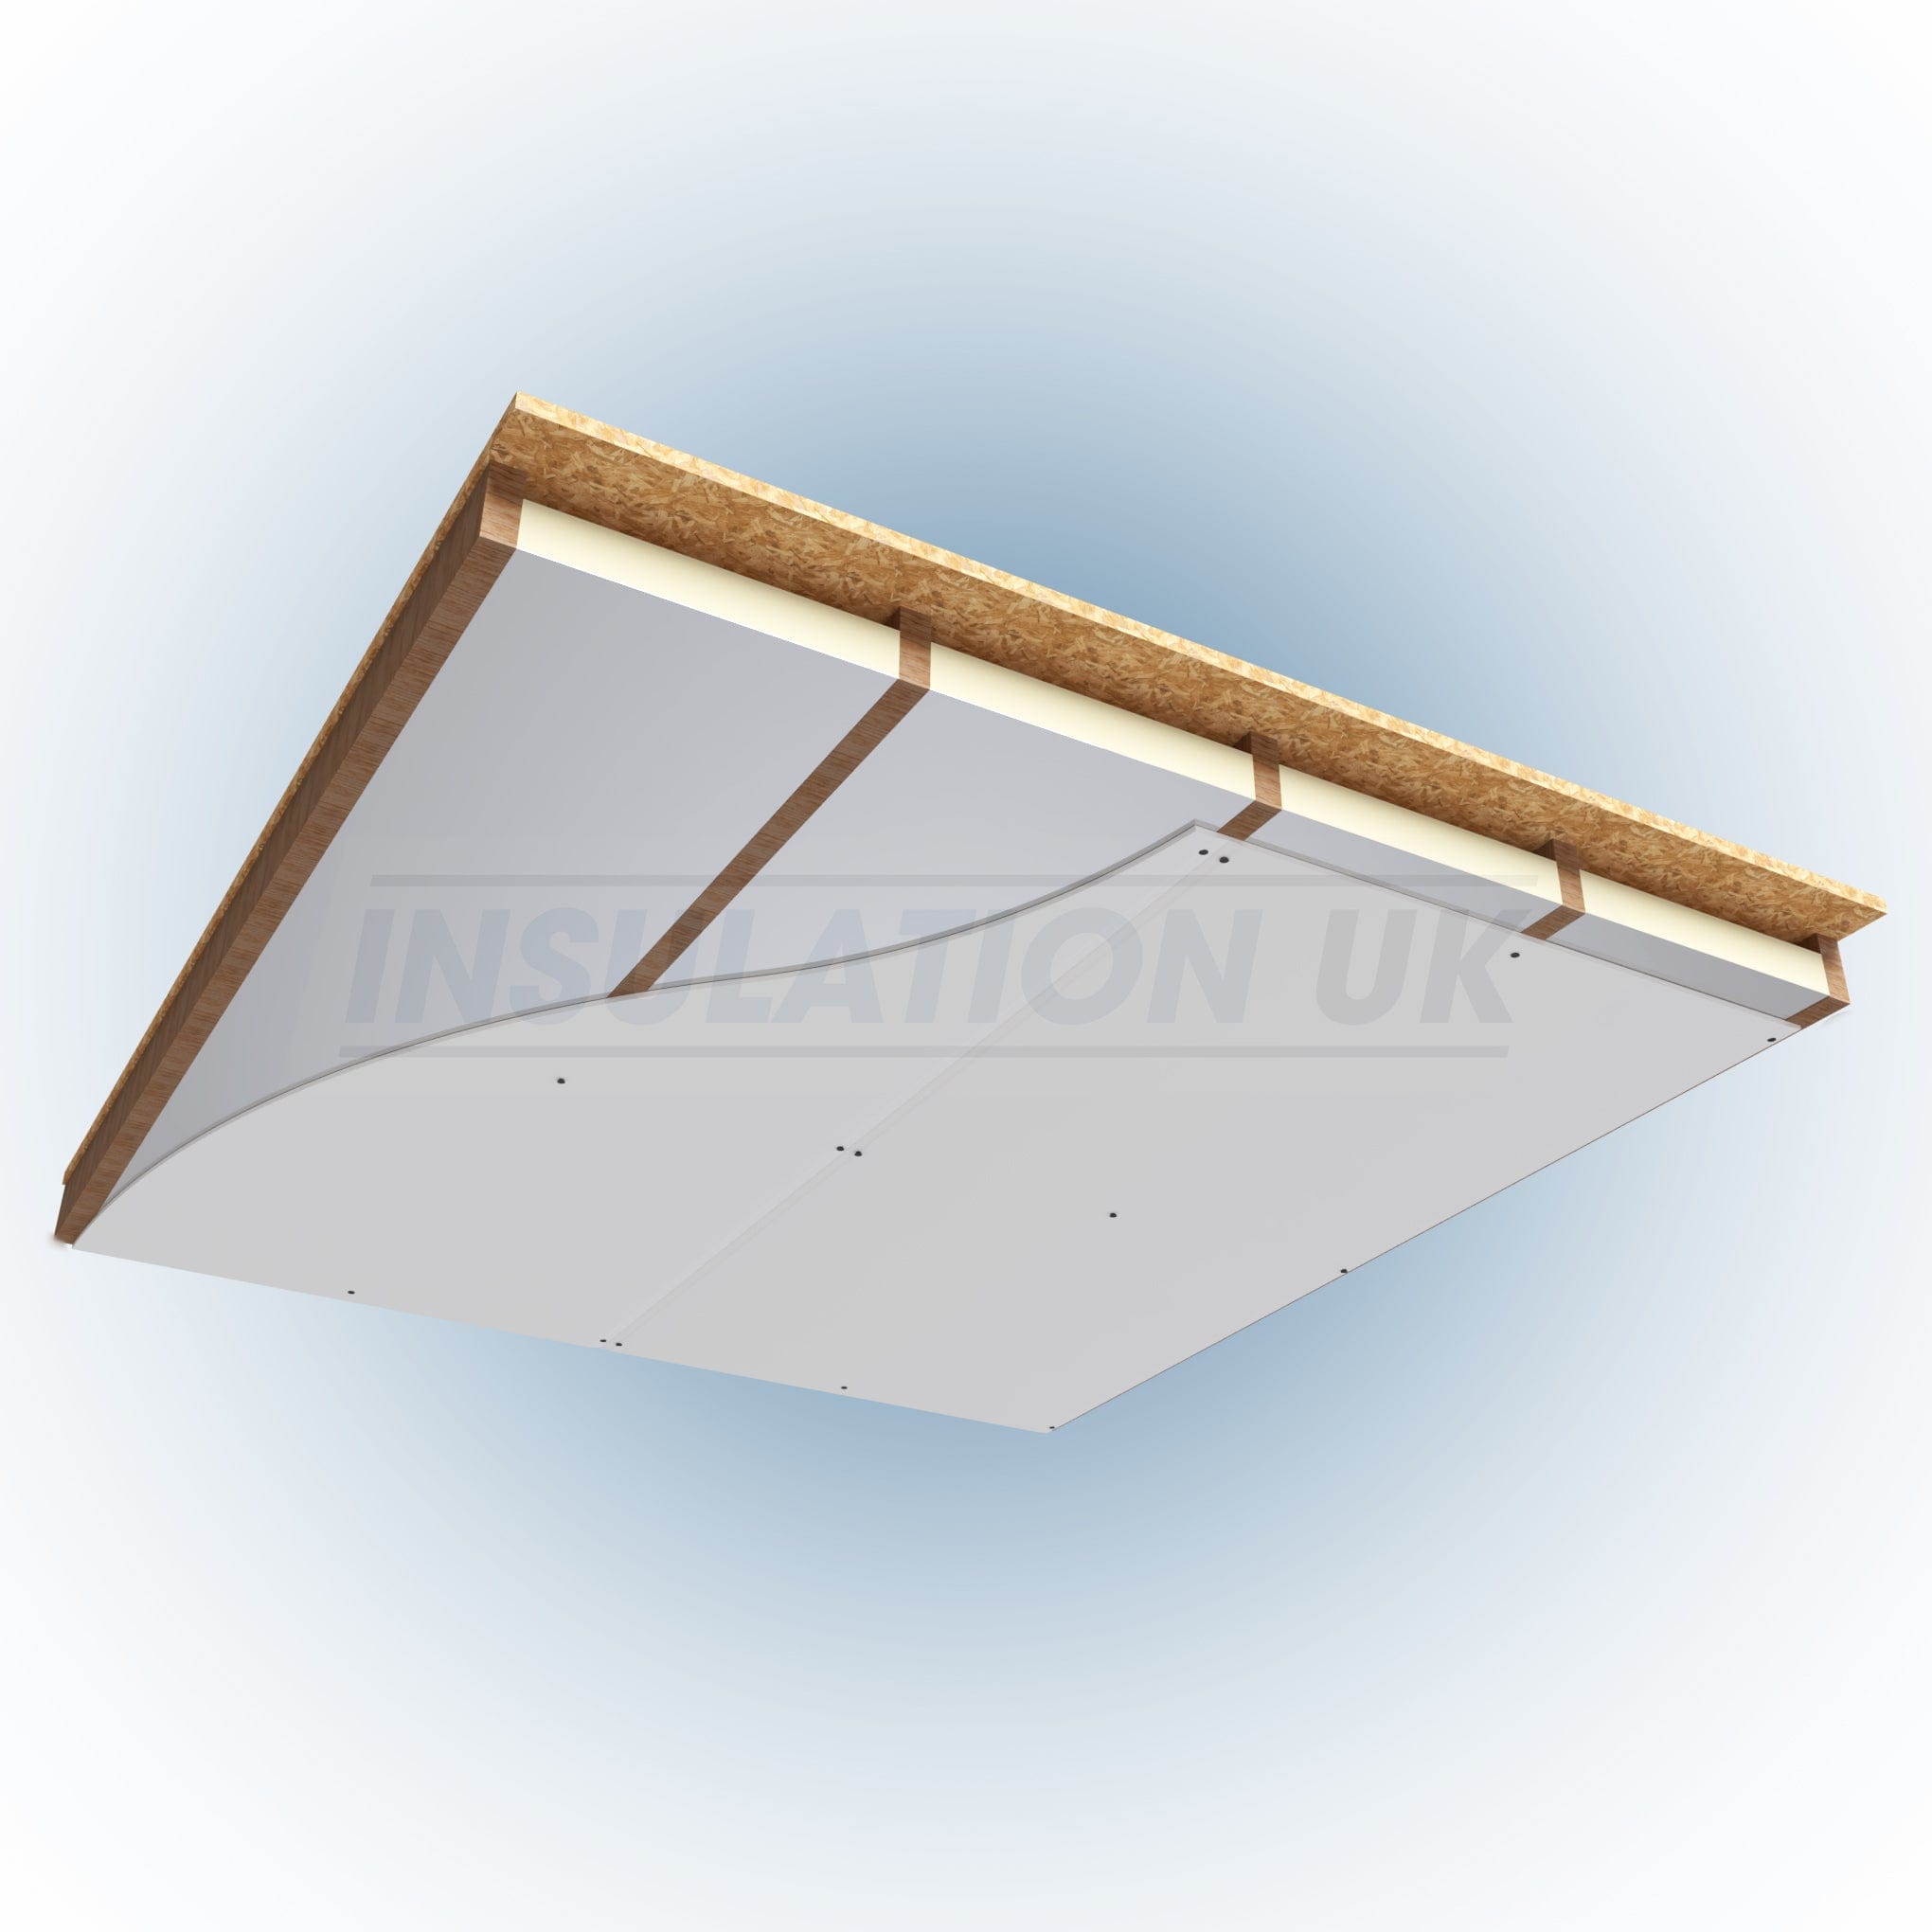 InsulationUK Pir Insulation Strips PIR Board Strip | 2400mm x 600mm PIR Board Strip 2400mm x 600mm | insulationuk.co.uk